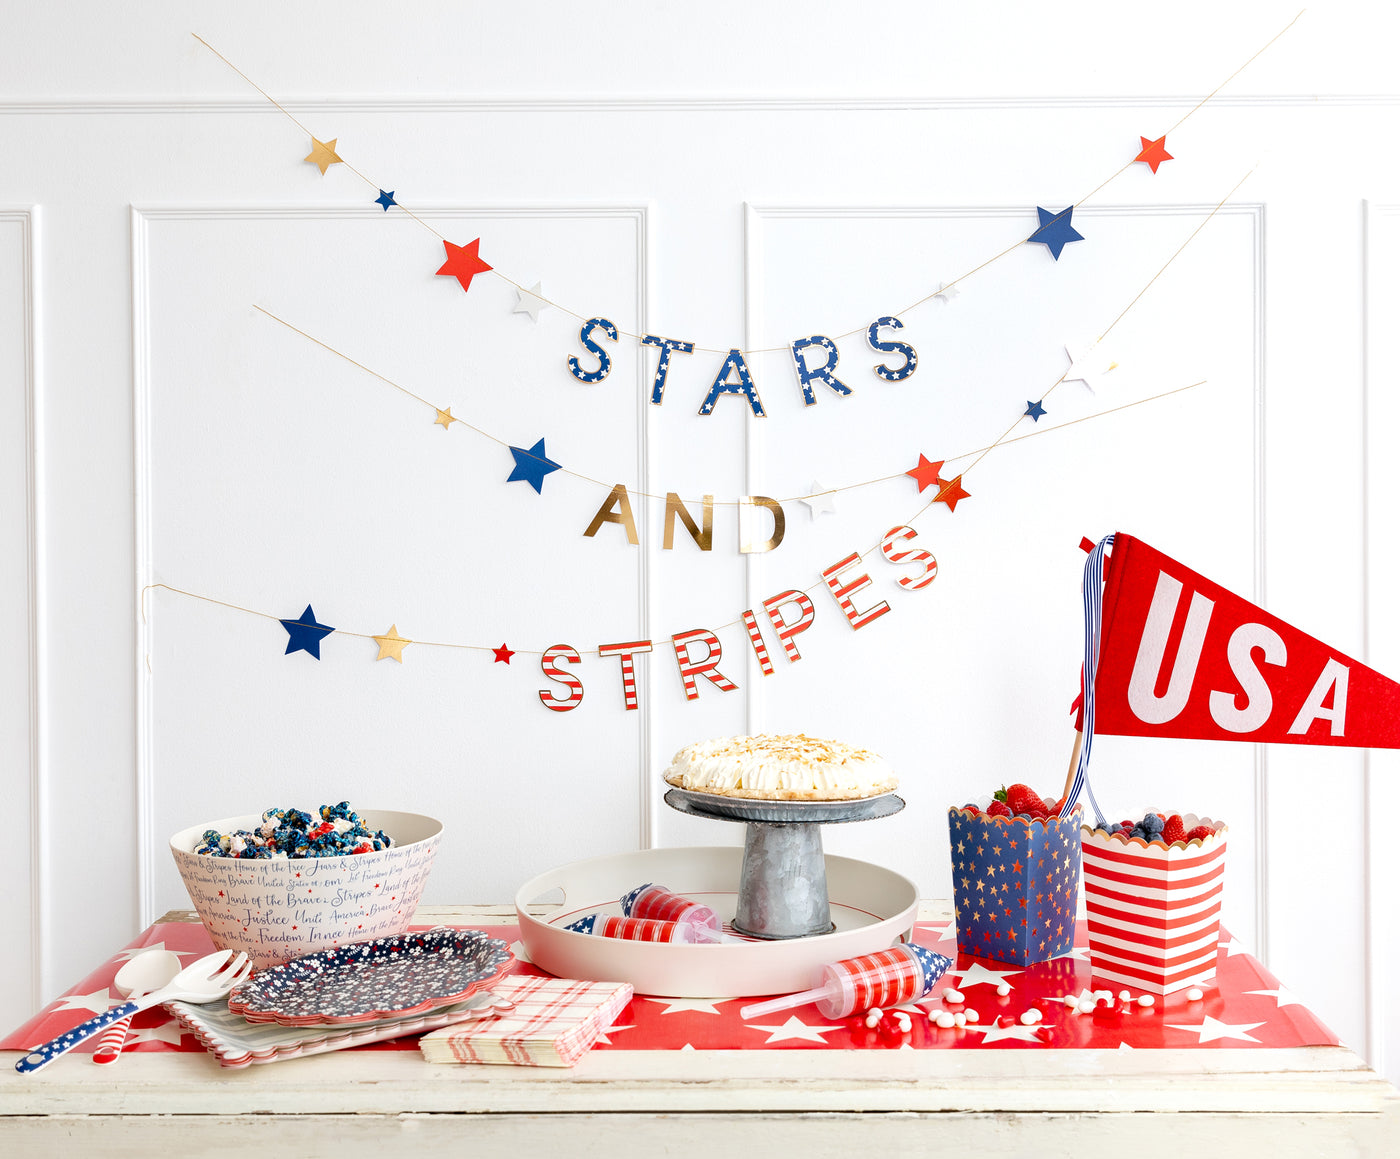 SSP906 - Stars and Stripes Banner